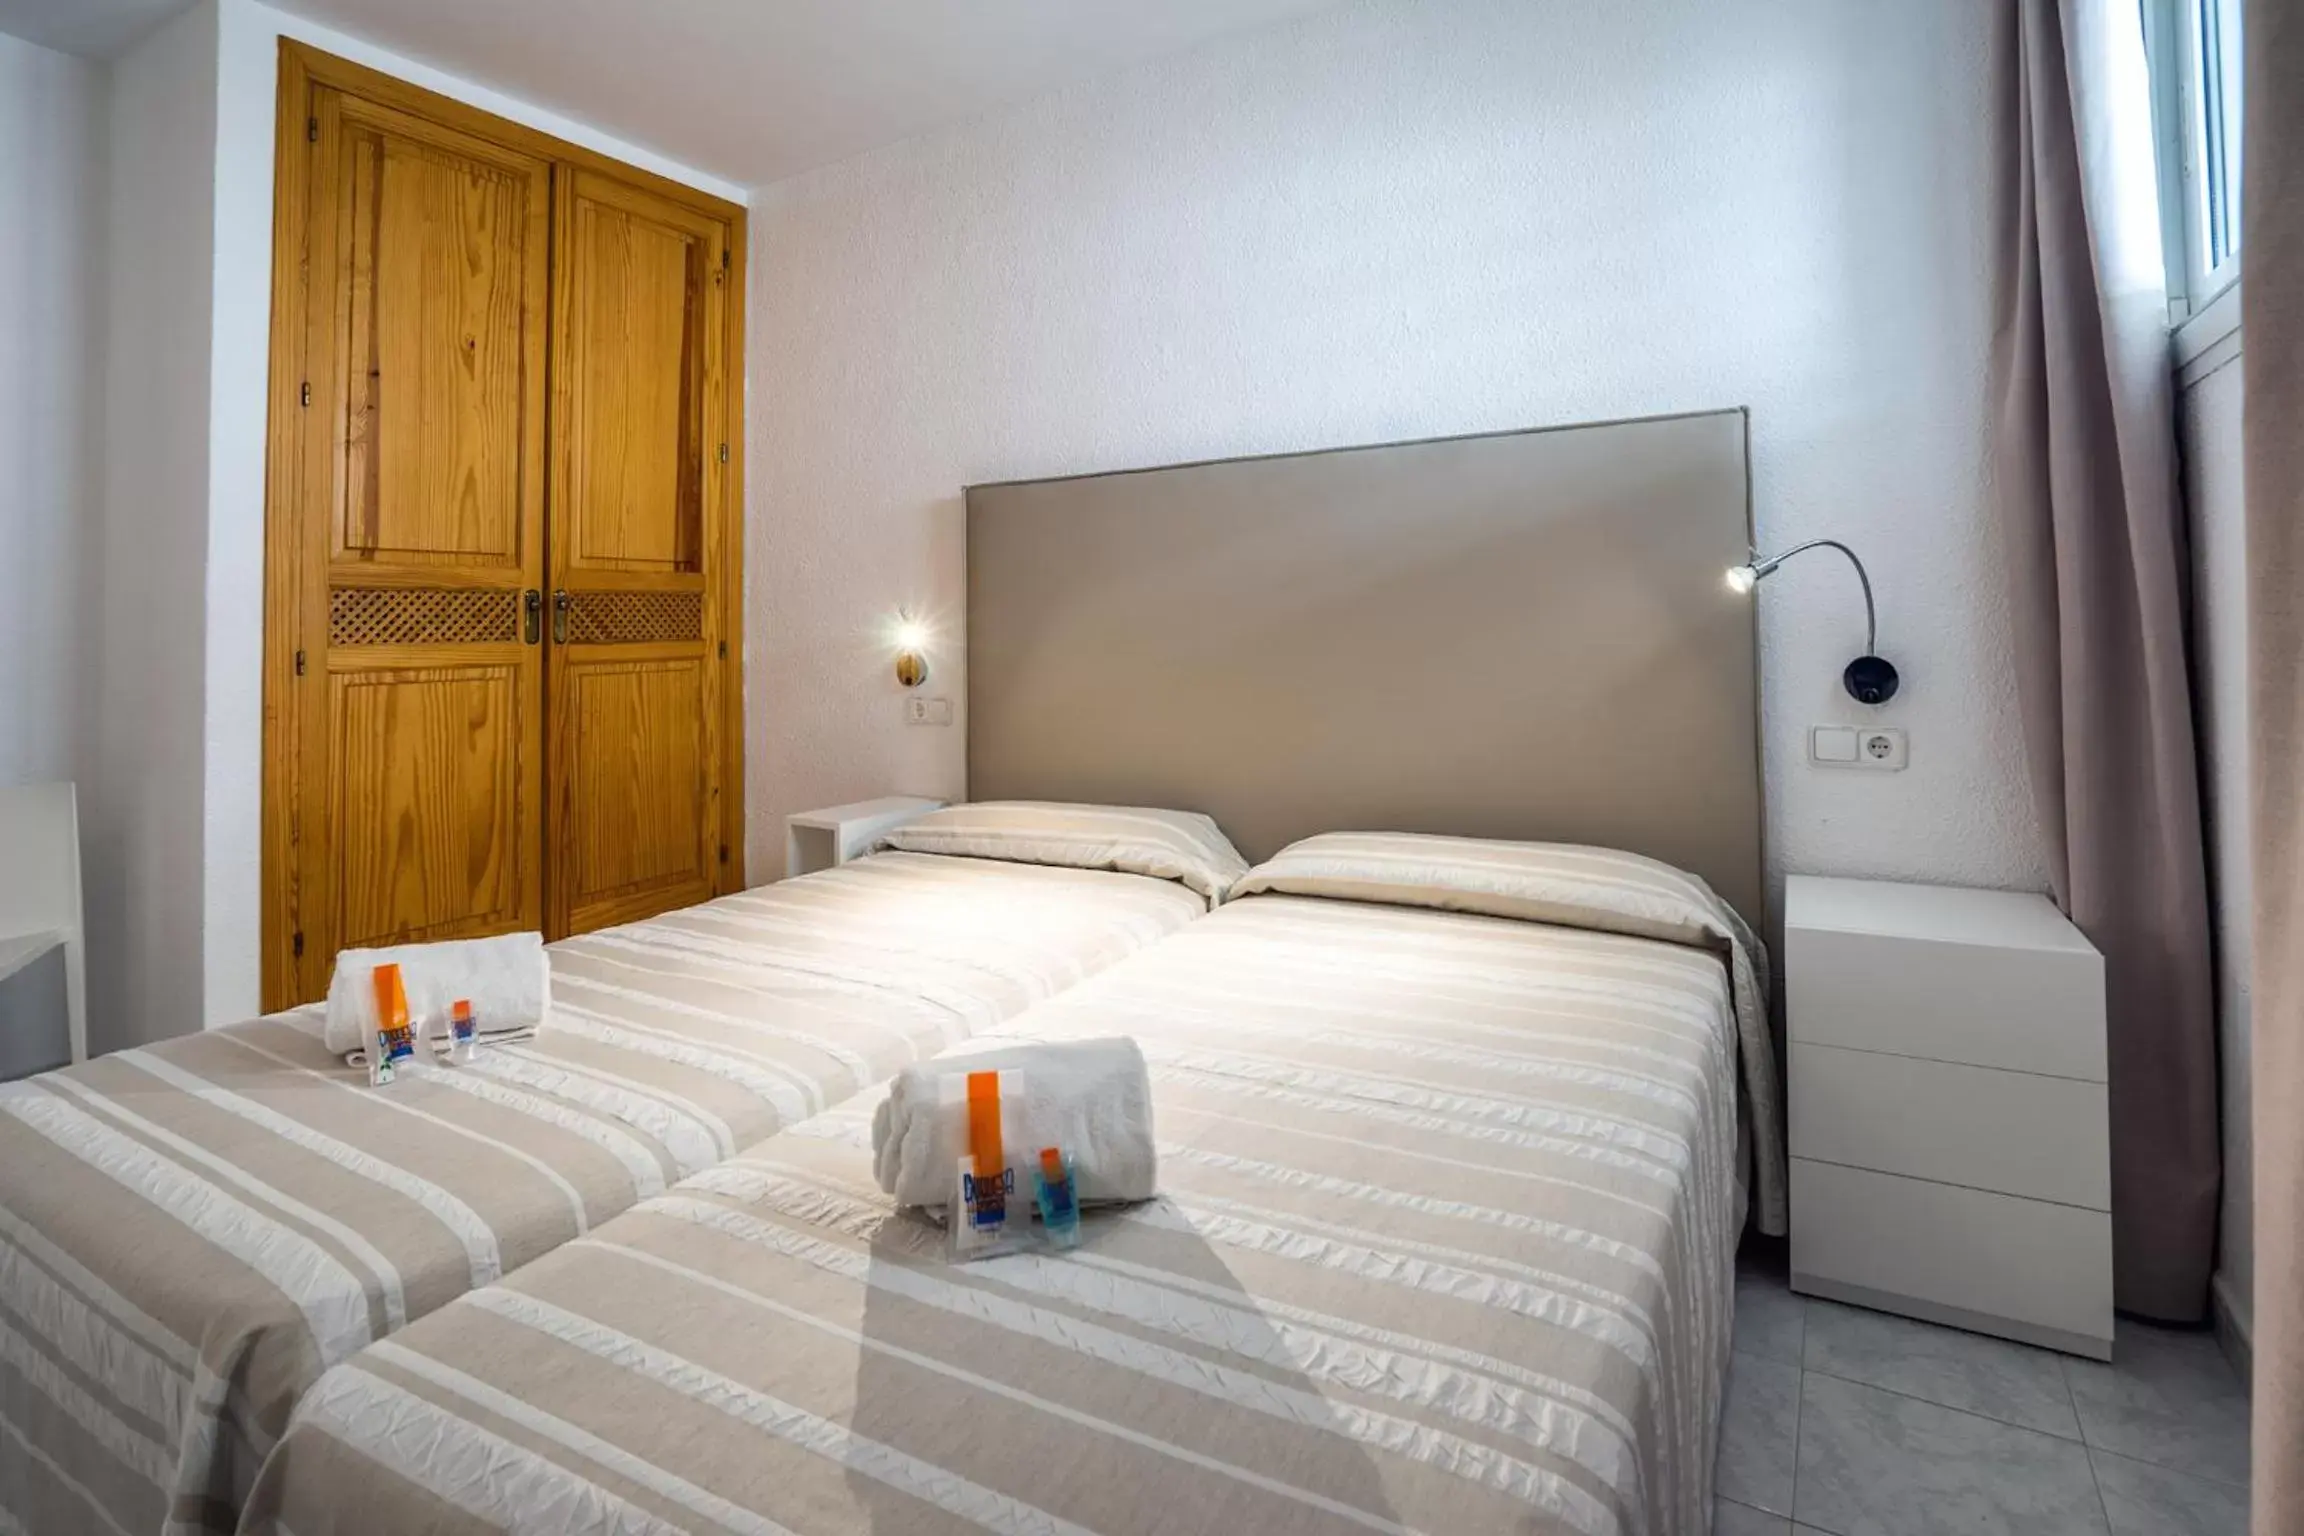 Bed, Room Photo in Aparthotel Duquesa Playa